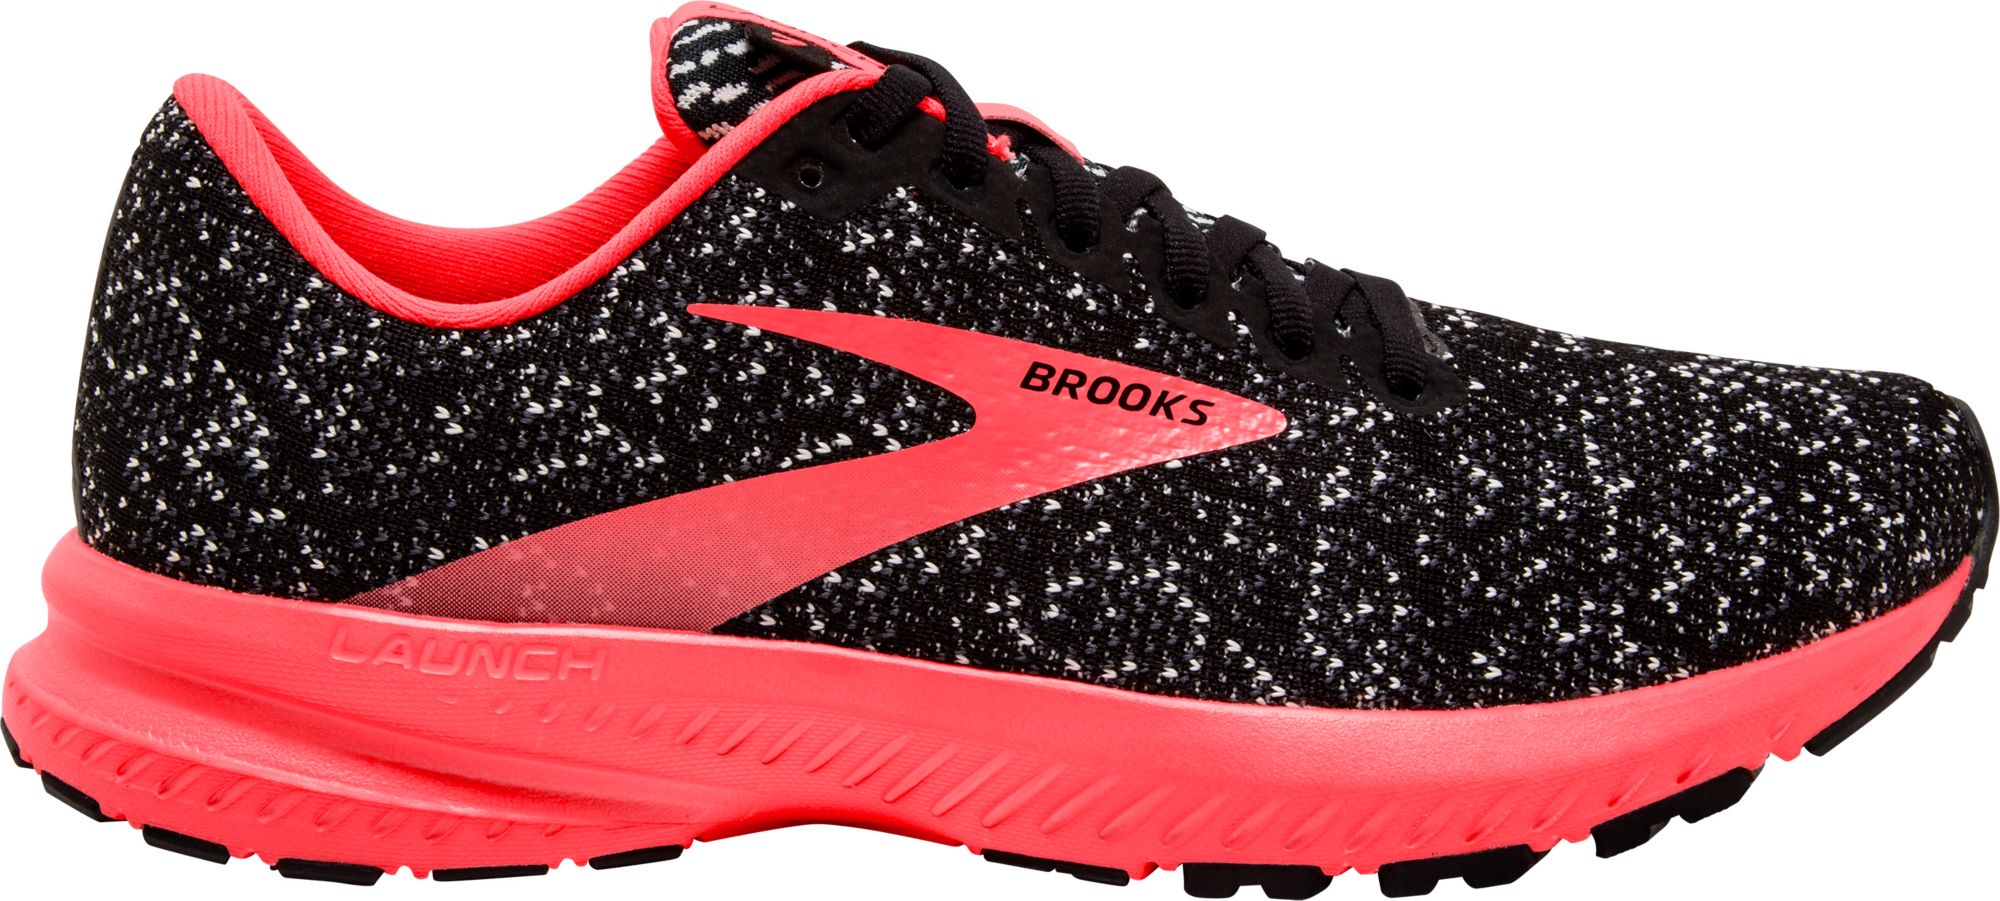 brooks women's launch 7 usa running shoes